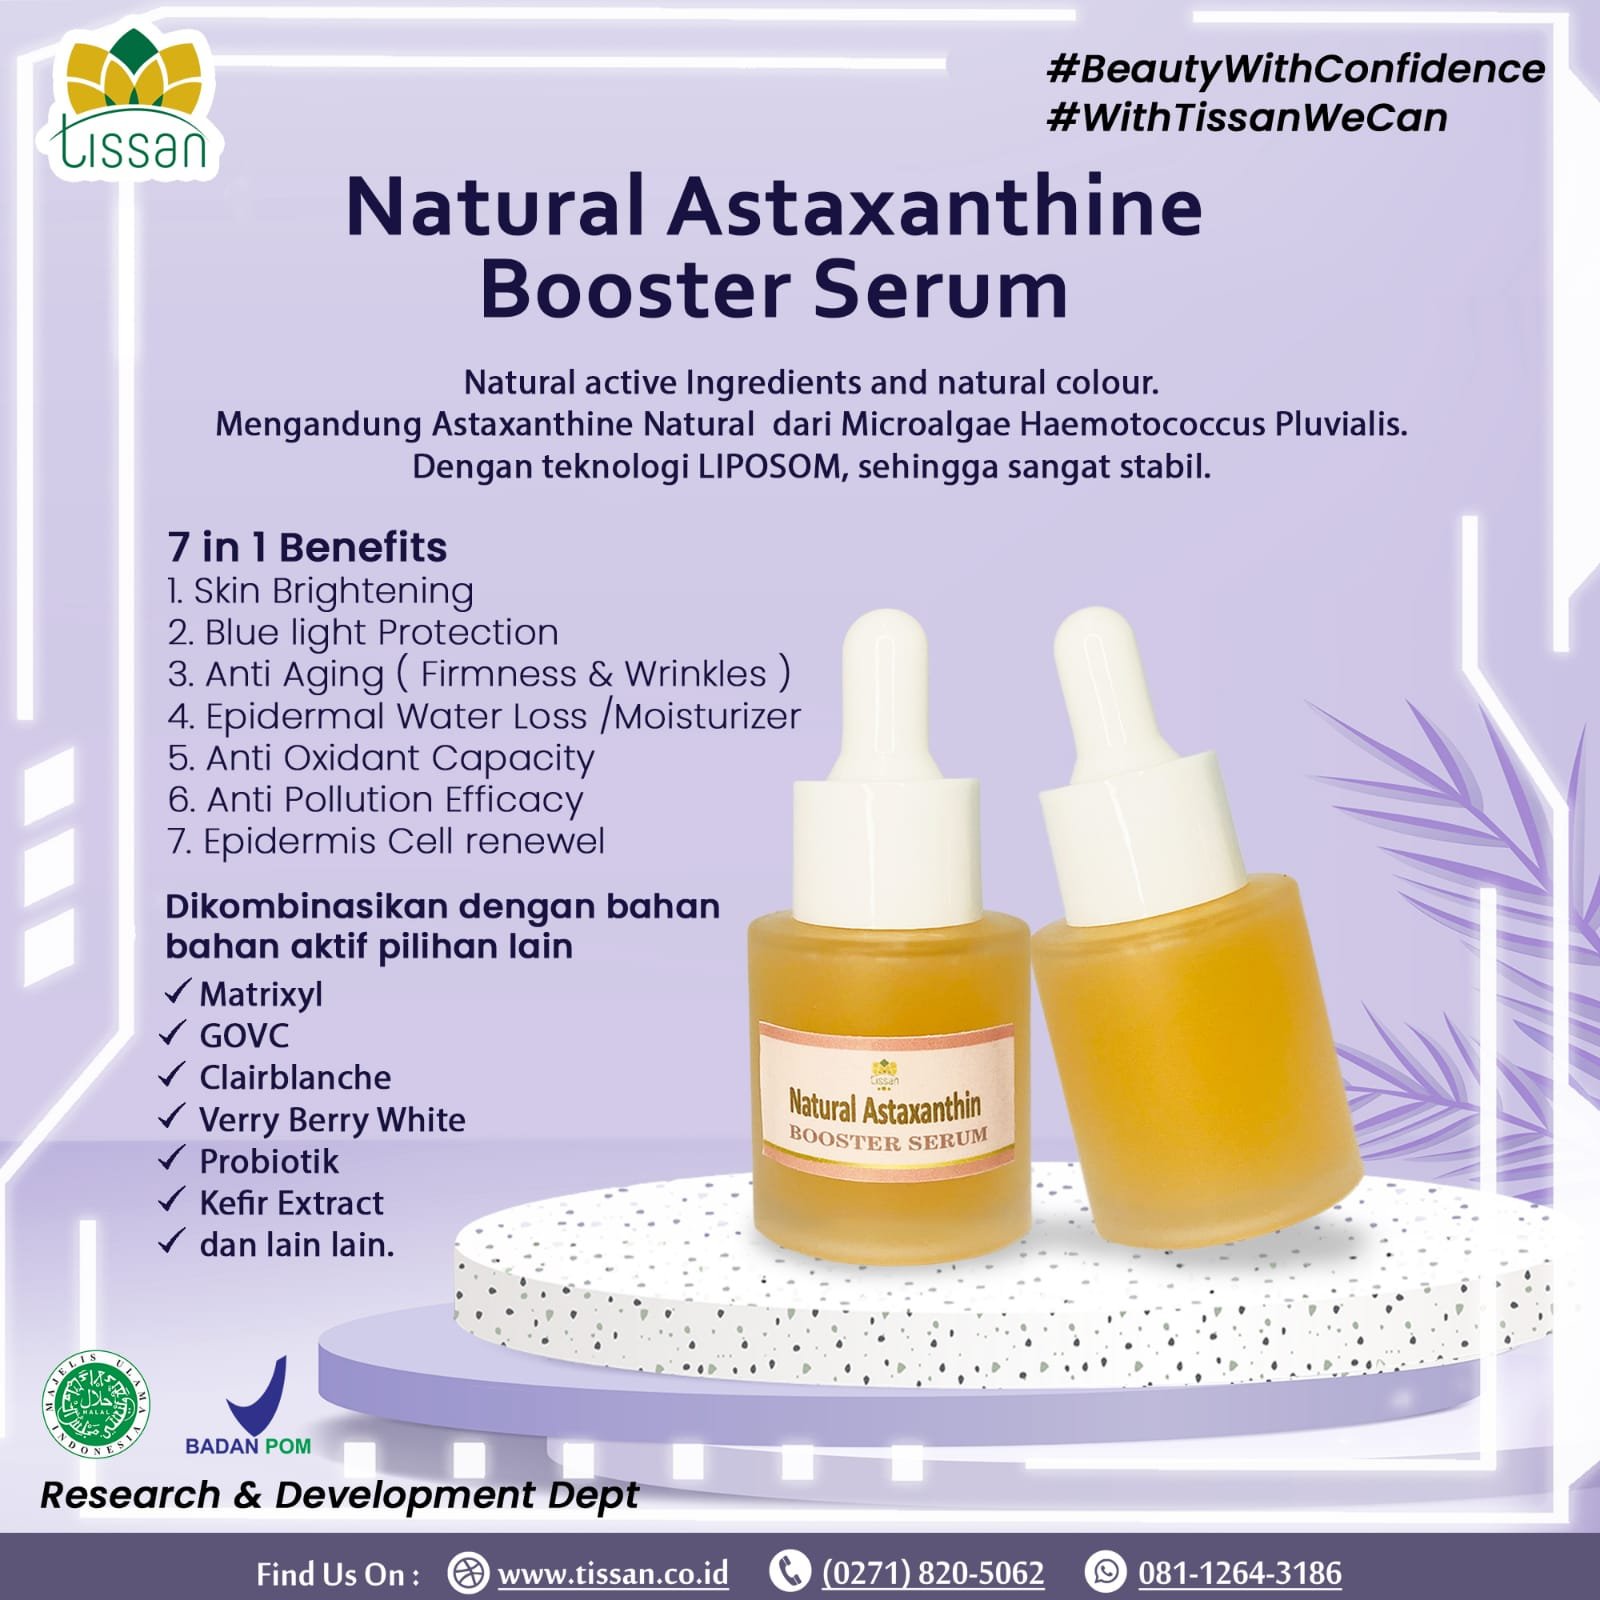 Natural Astaxanthine Booster Serum